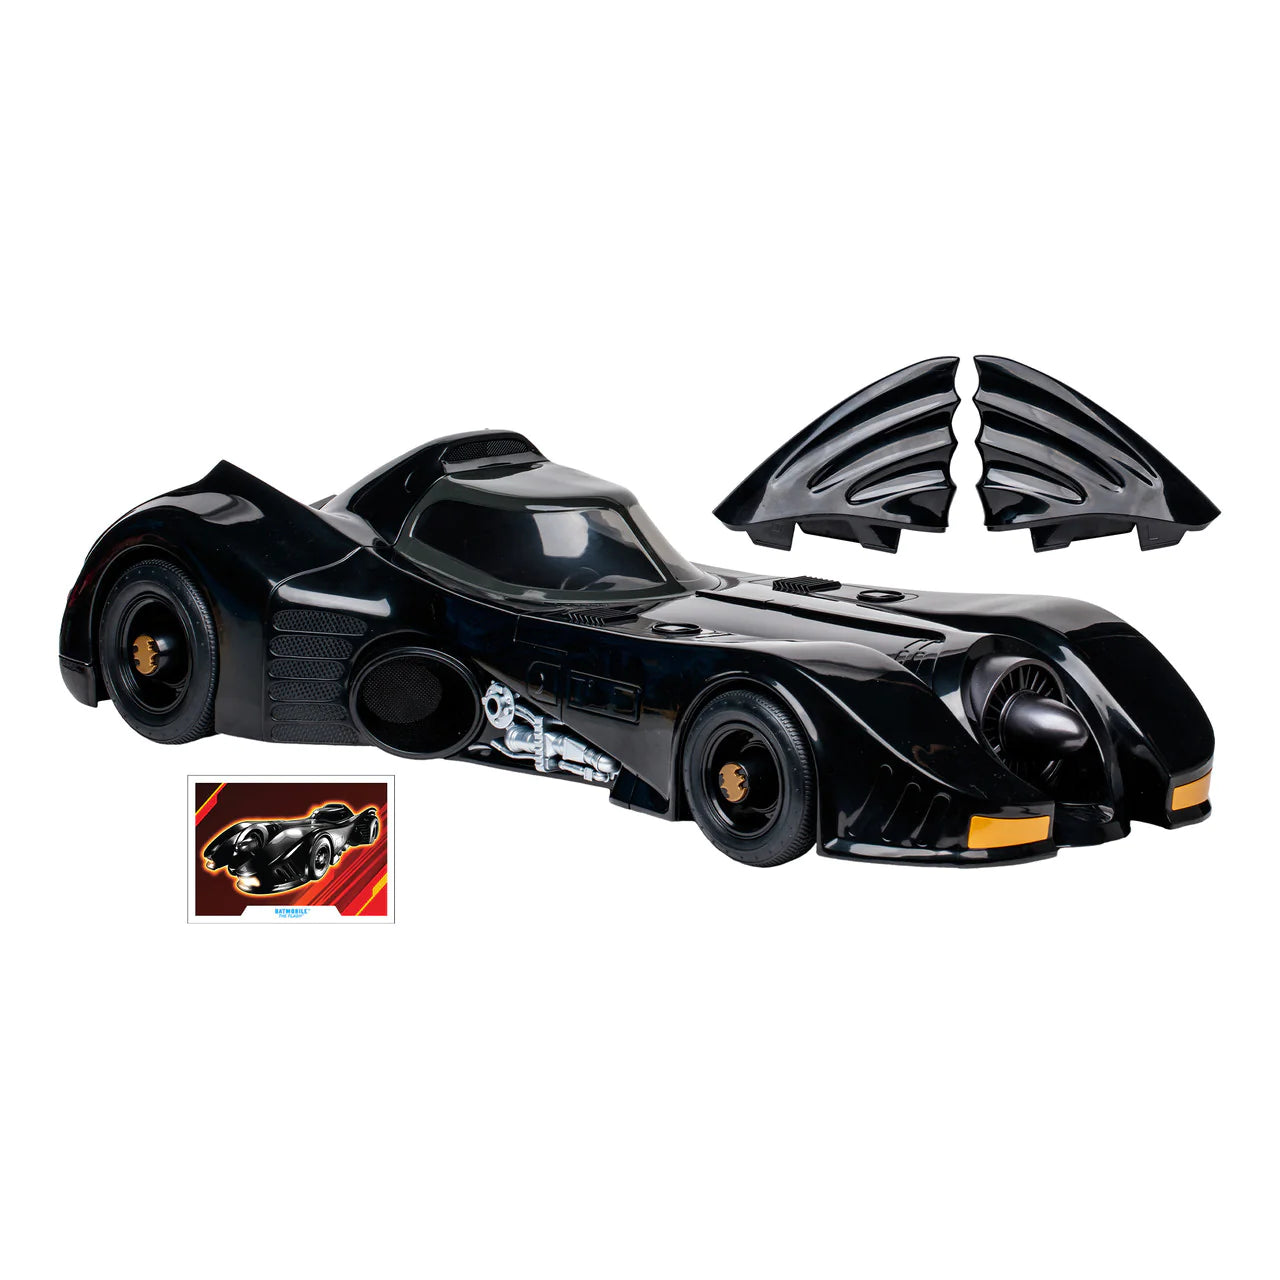 Batmobile (The Flash Movie) Vehicle By McFarlane